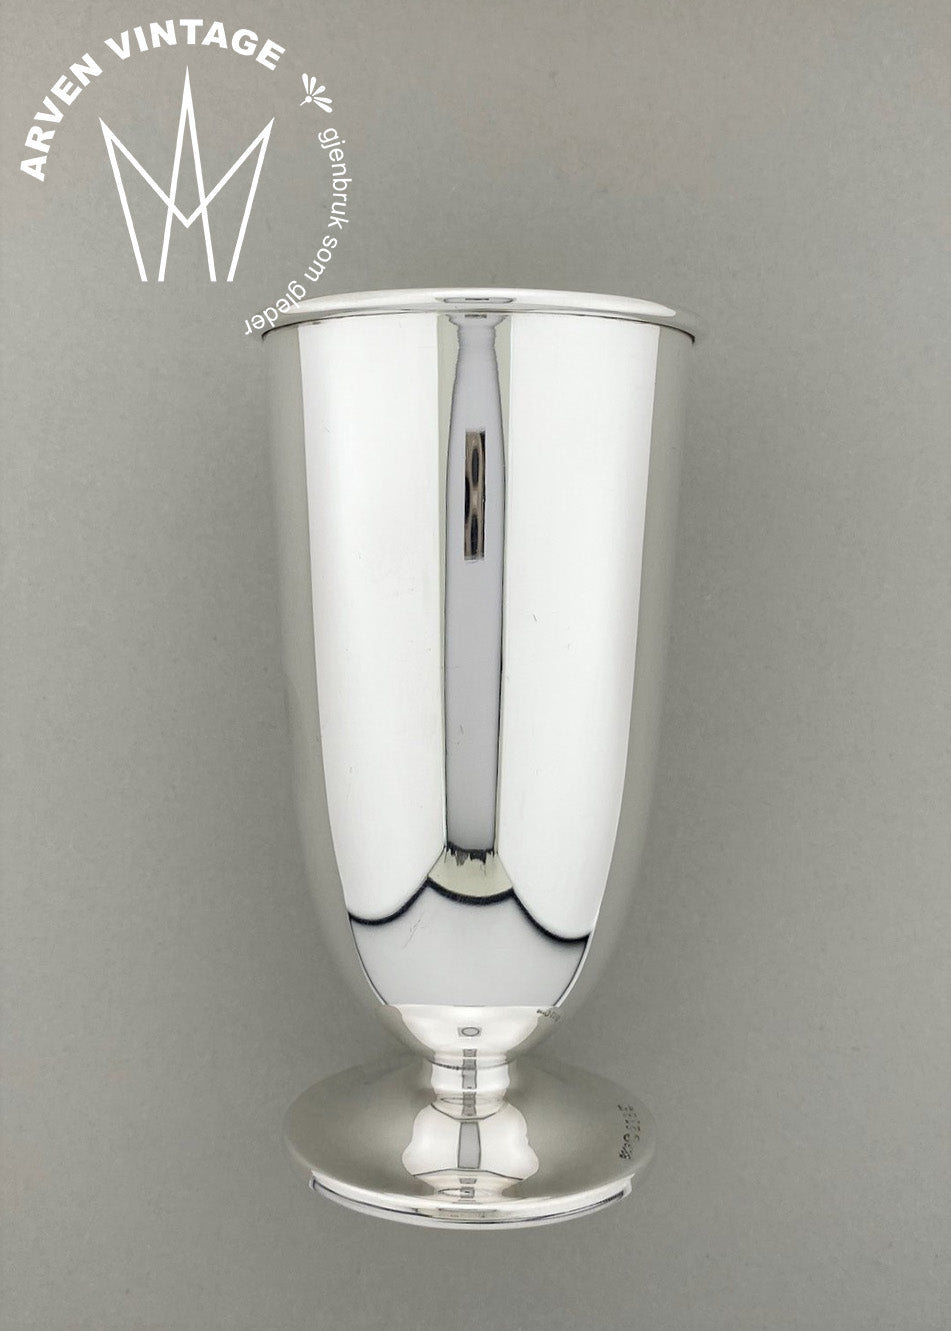 Vintage cup / flower vase